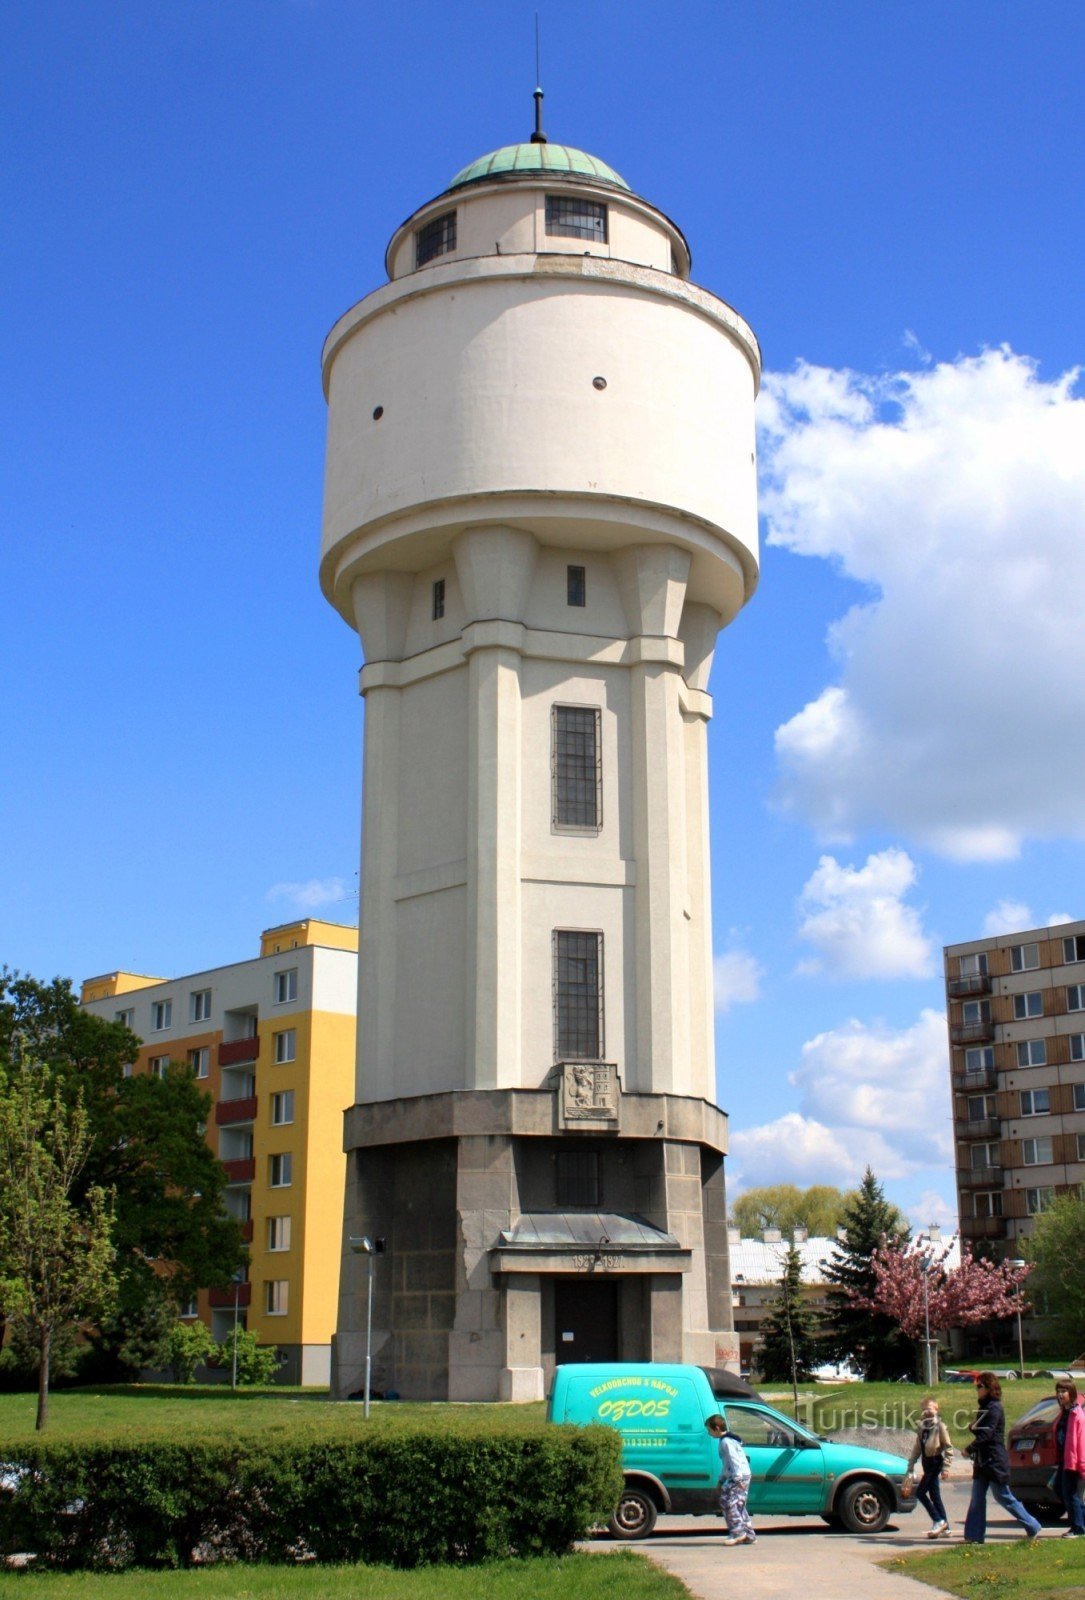 Břeclav - water tower